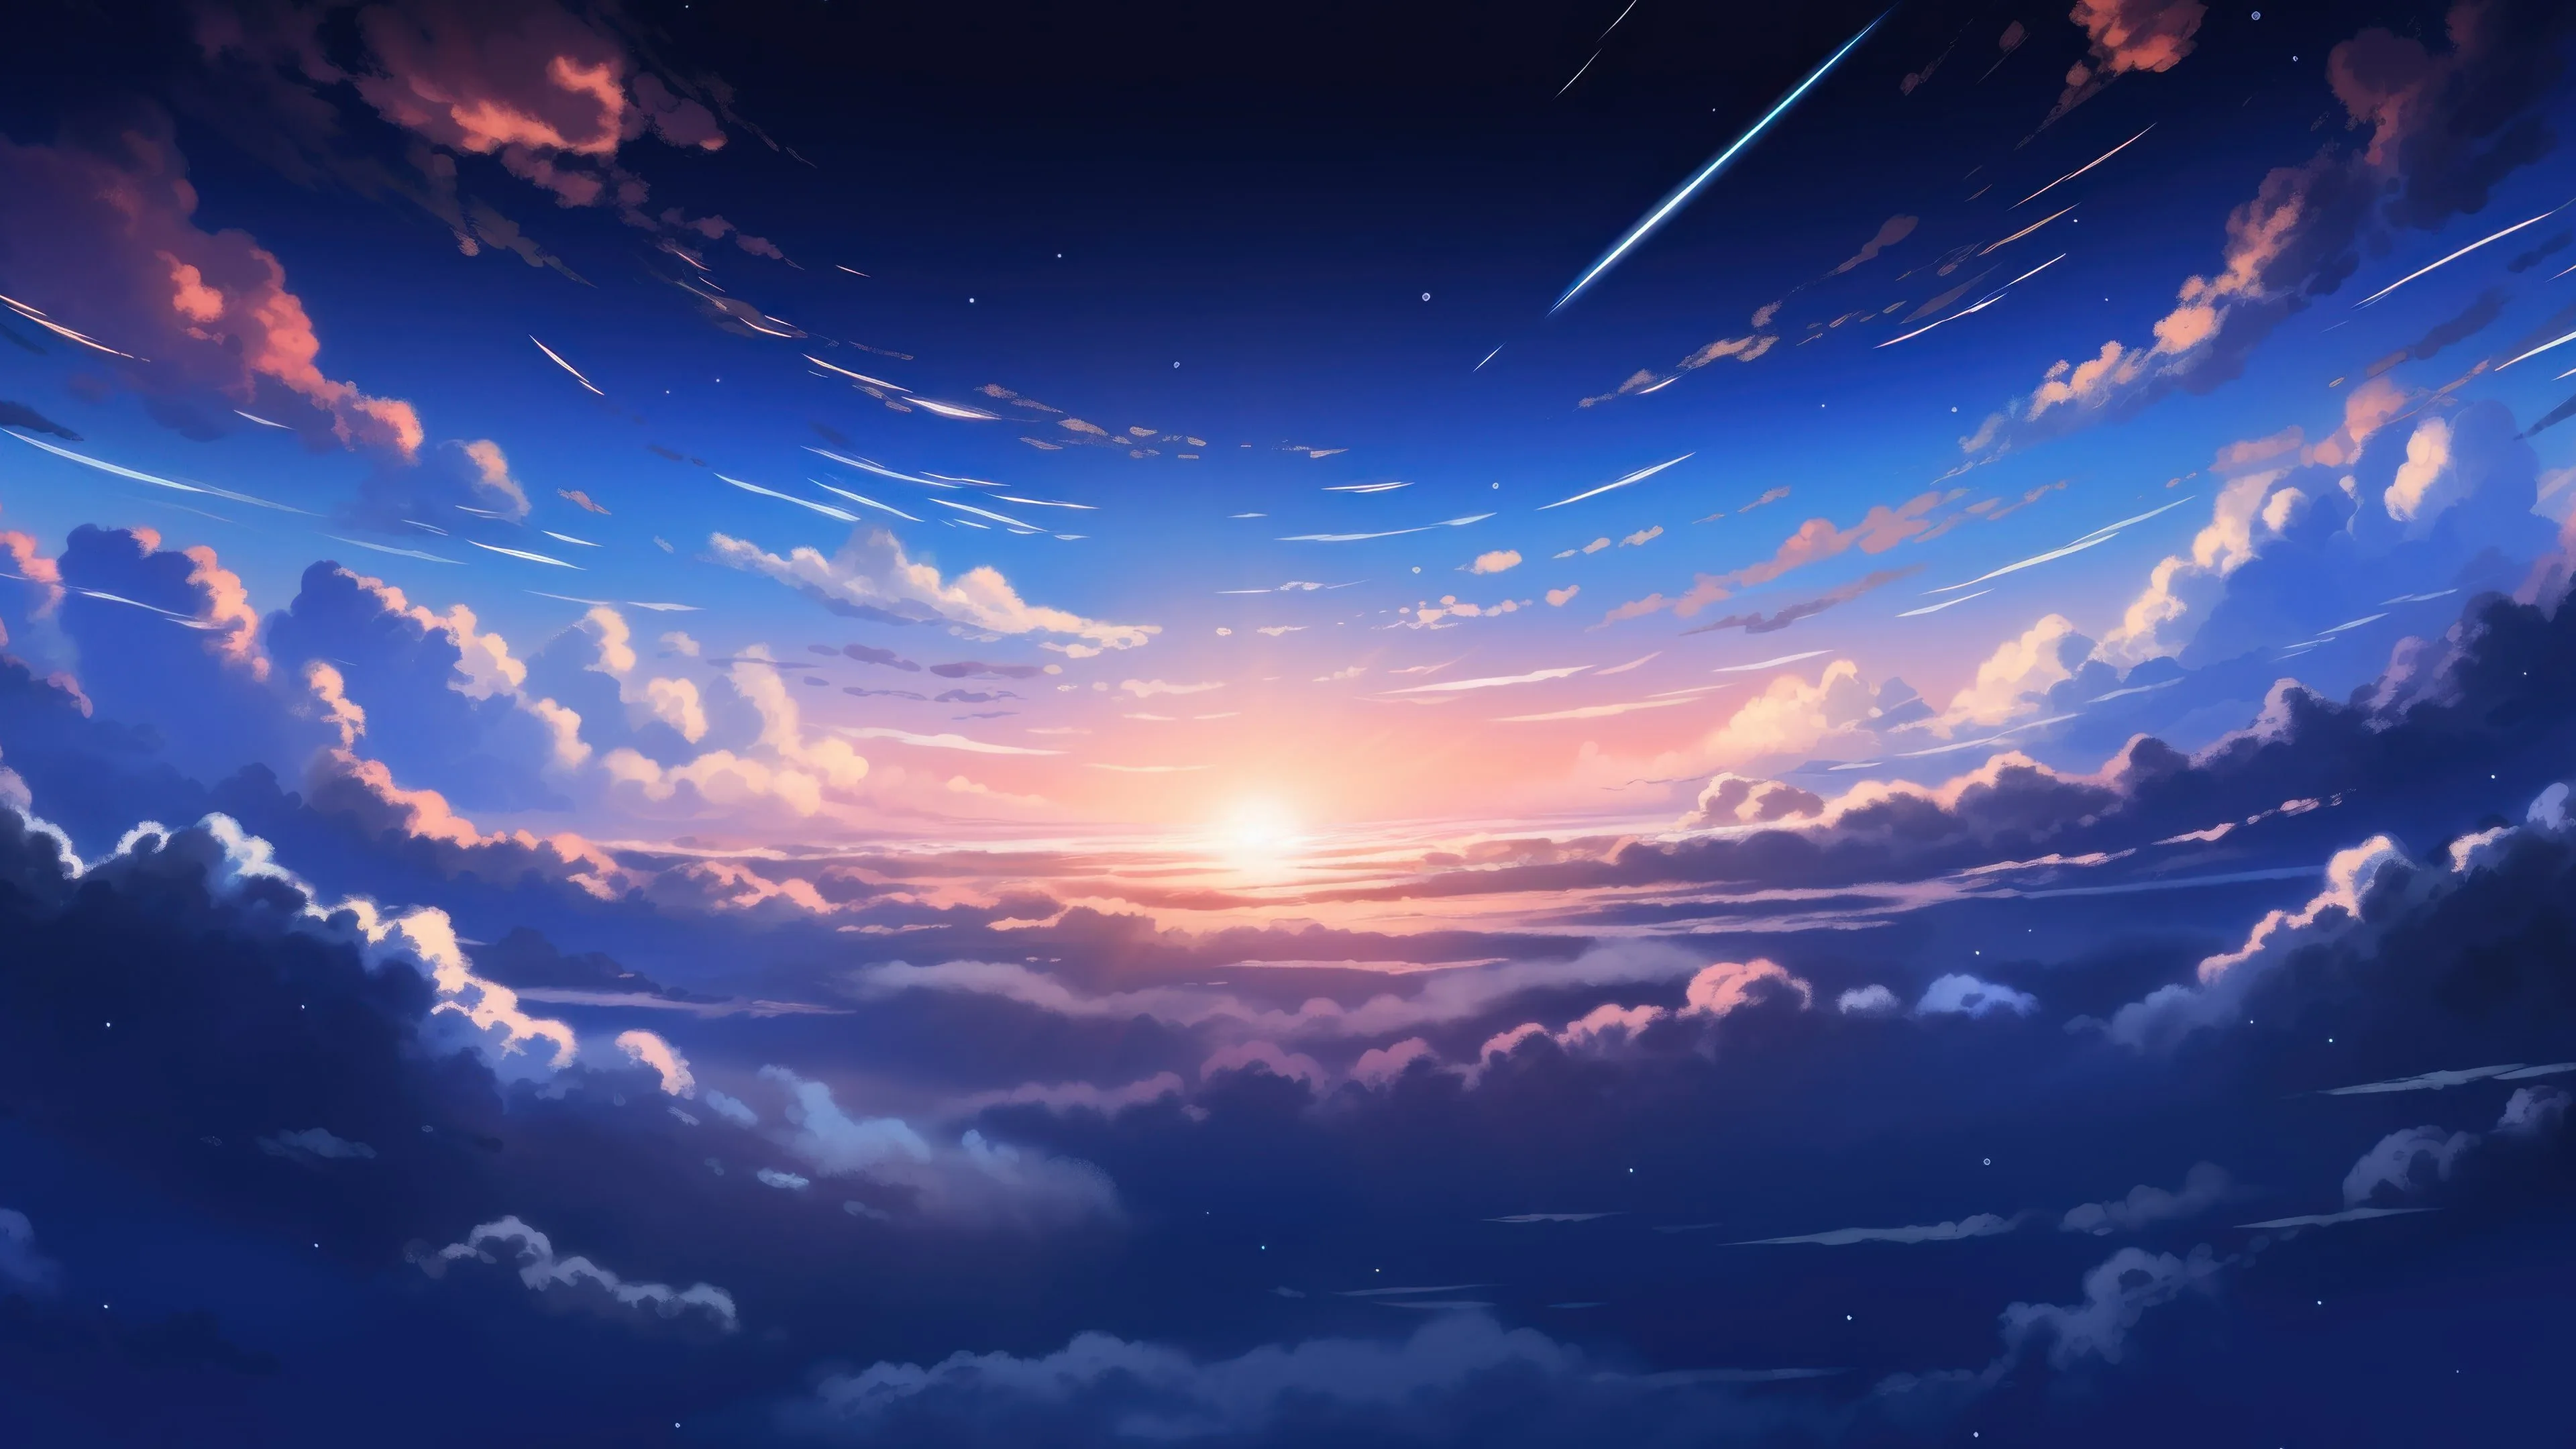 Anime Sky Images - Free Download on Freepik